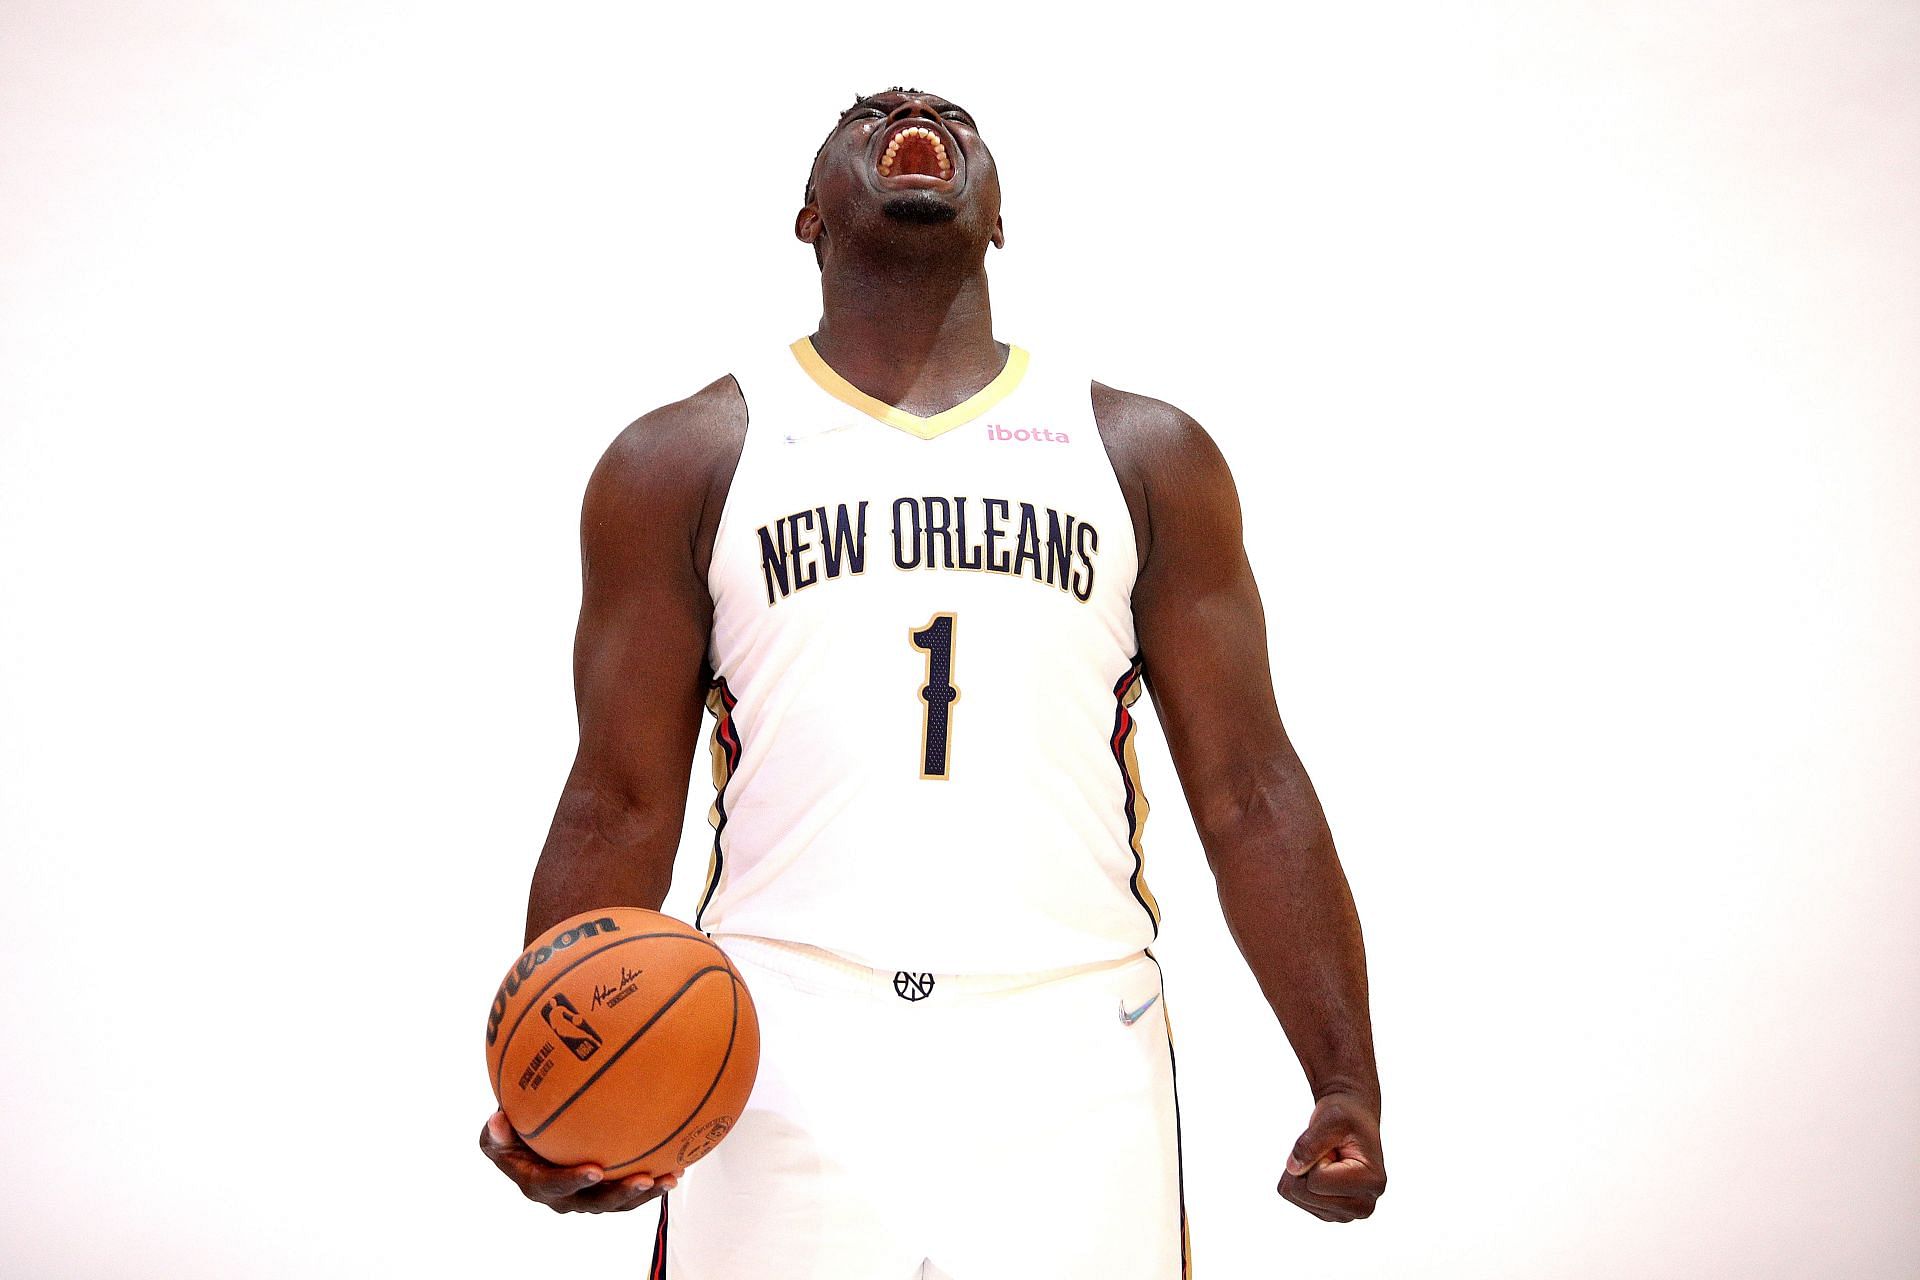 New Orleans Pelicans star Zion Williamson